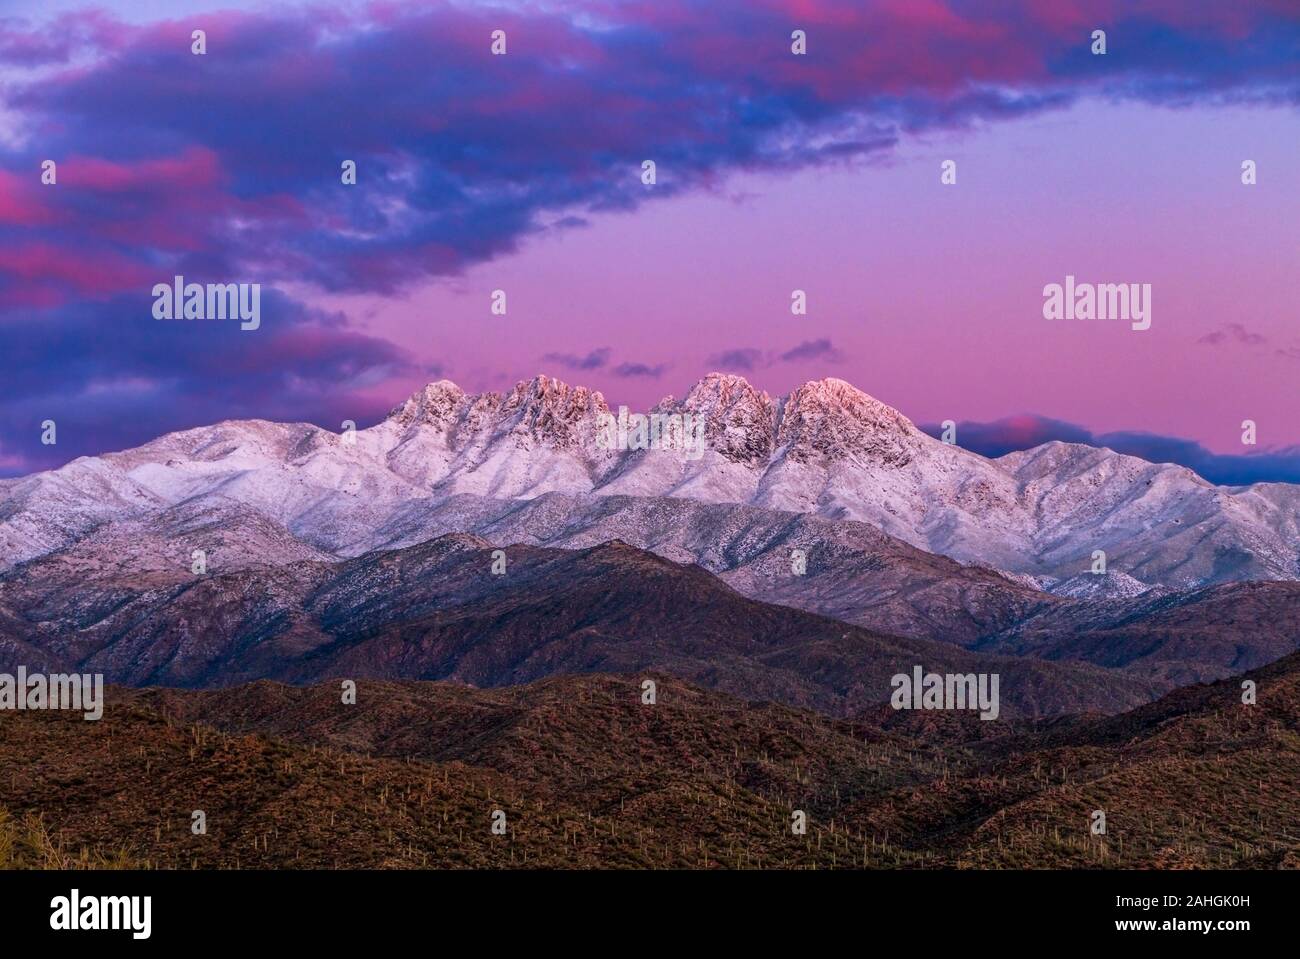 Sunset Image of the Snow Clad Four Peaks Mountain Range Outside Phoenix AZ Stock Photo